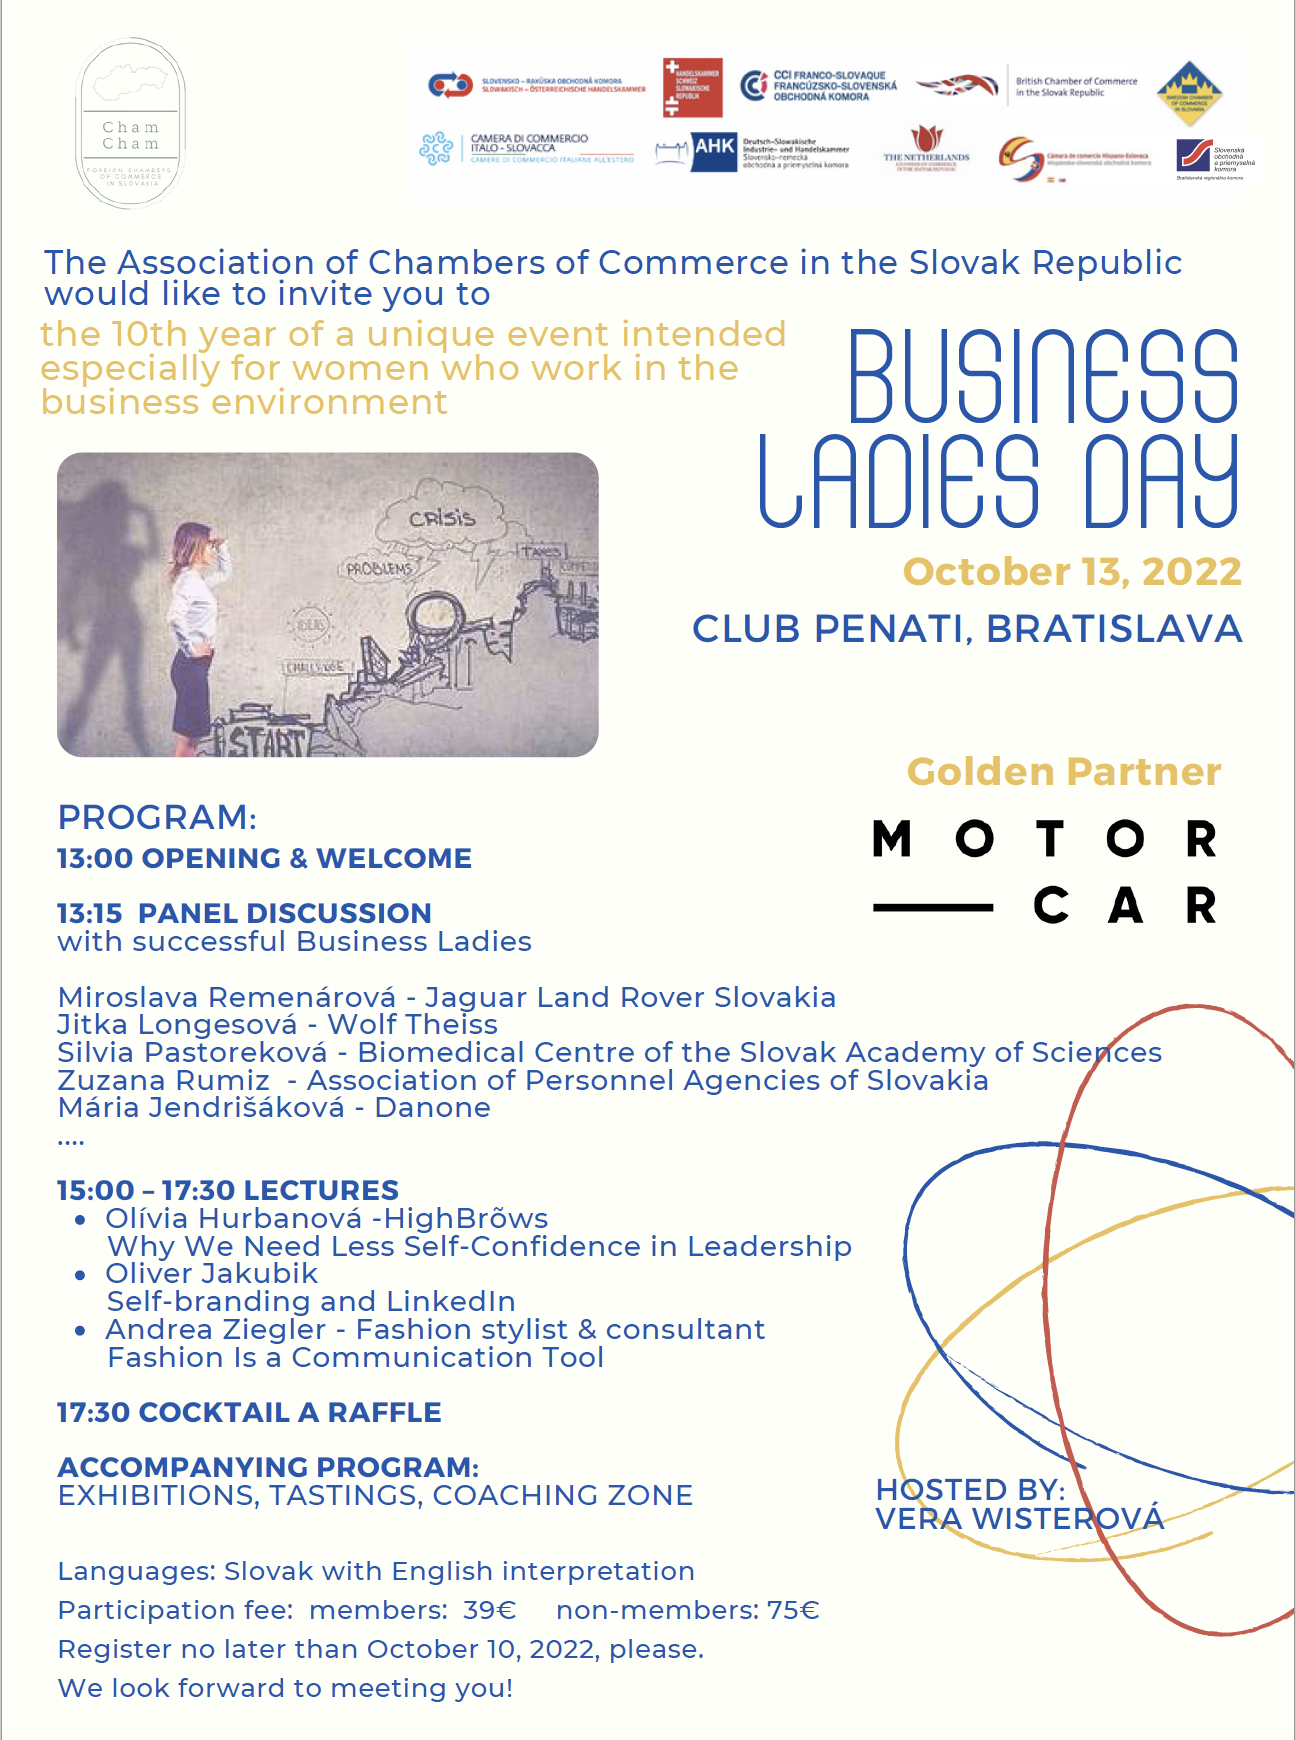 Business Ladies Day - Invitation